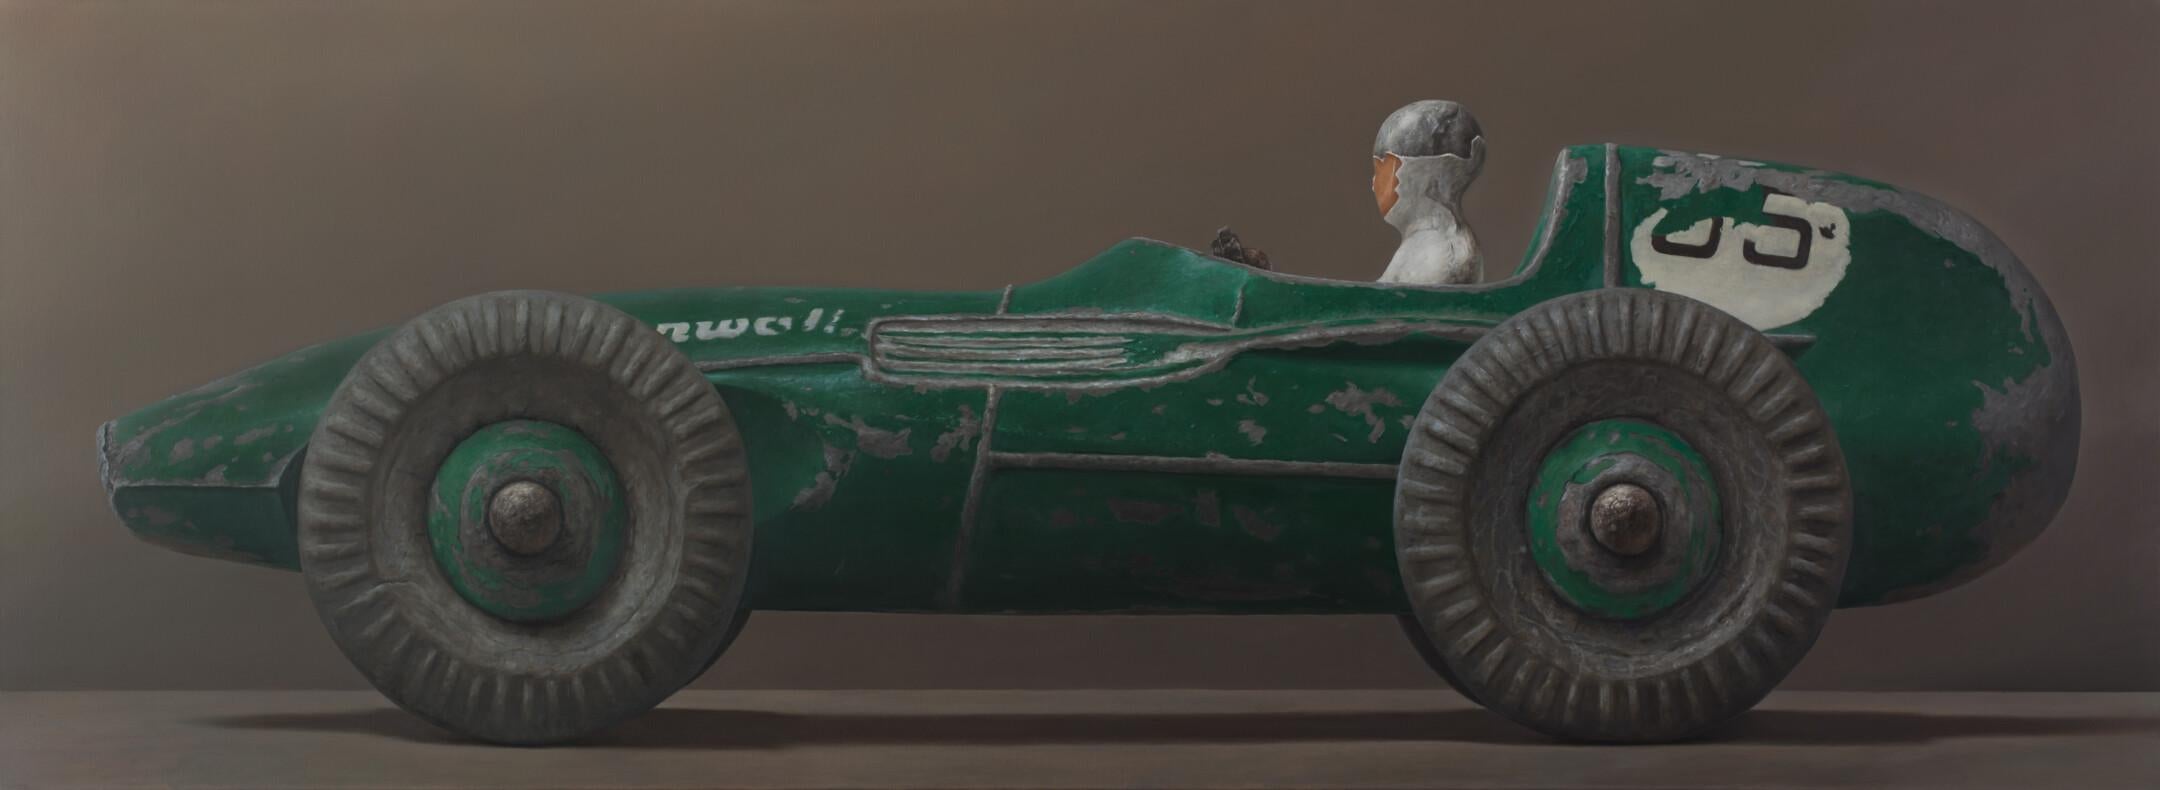 Bart Koning Still-Life Painting - Vanwall- 21st Century Hyper Realistic Stilllife painting of a Vanwall racing car